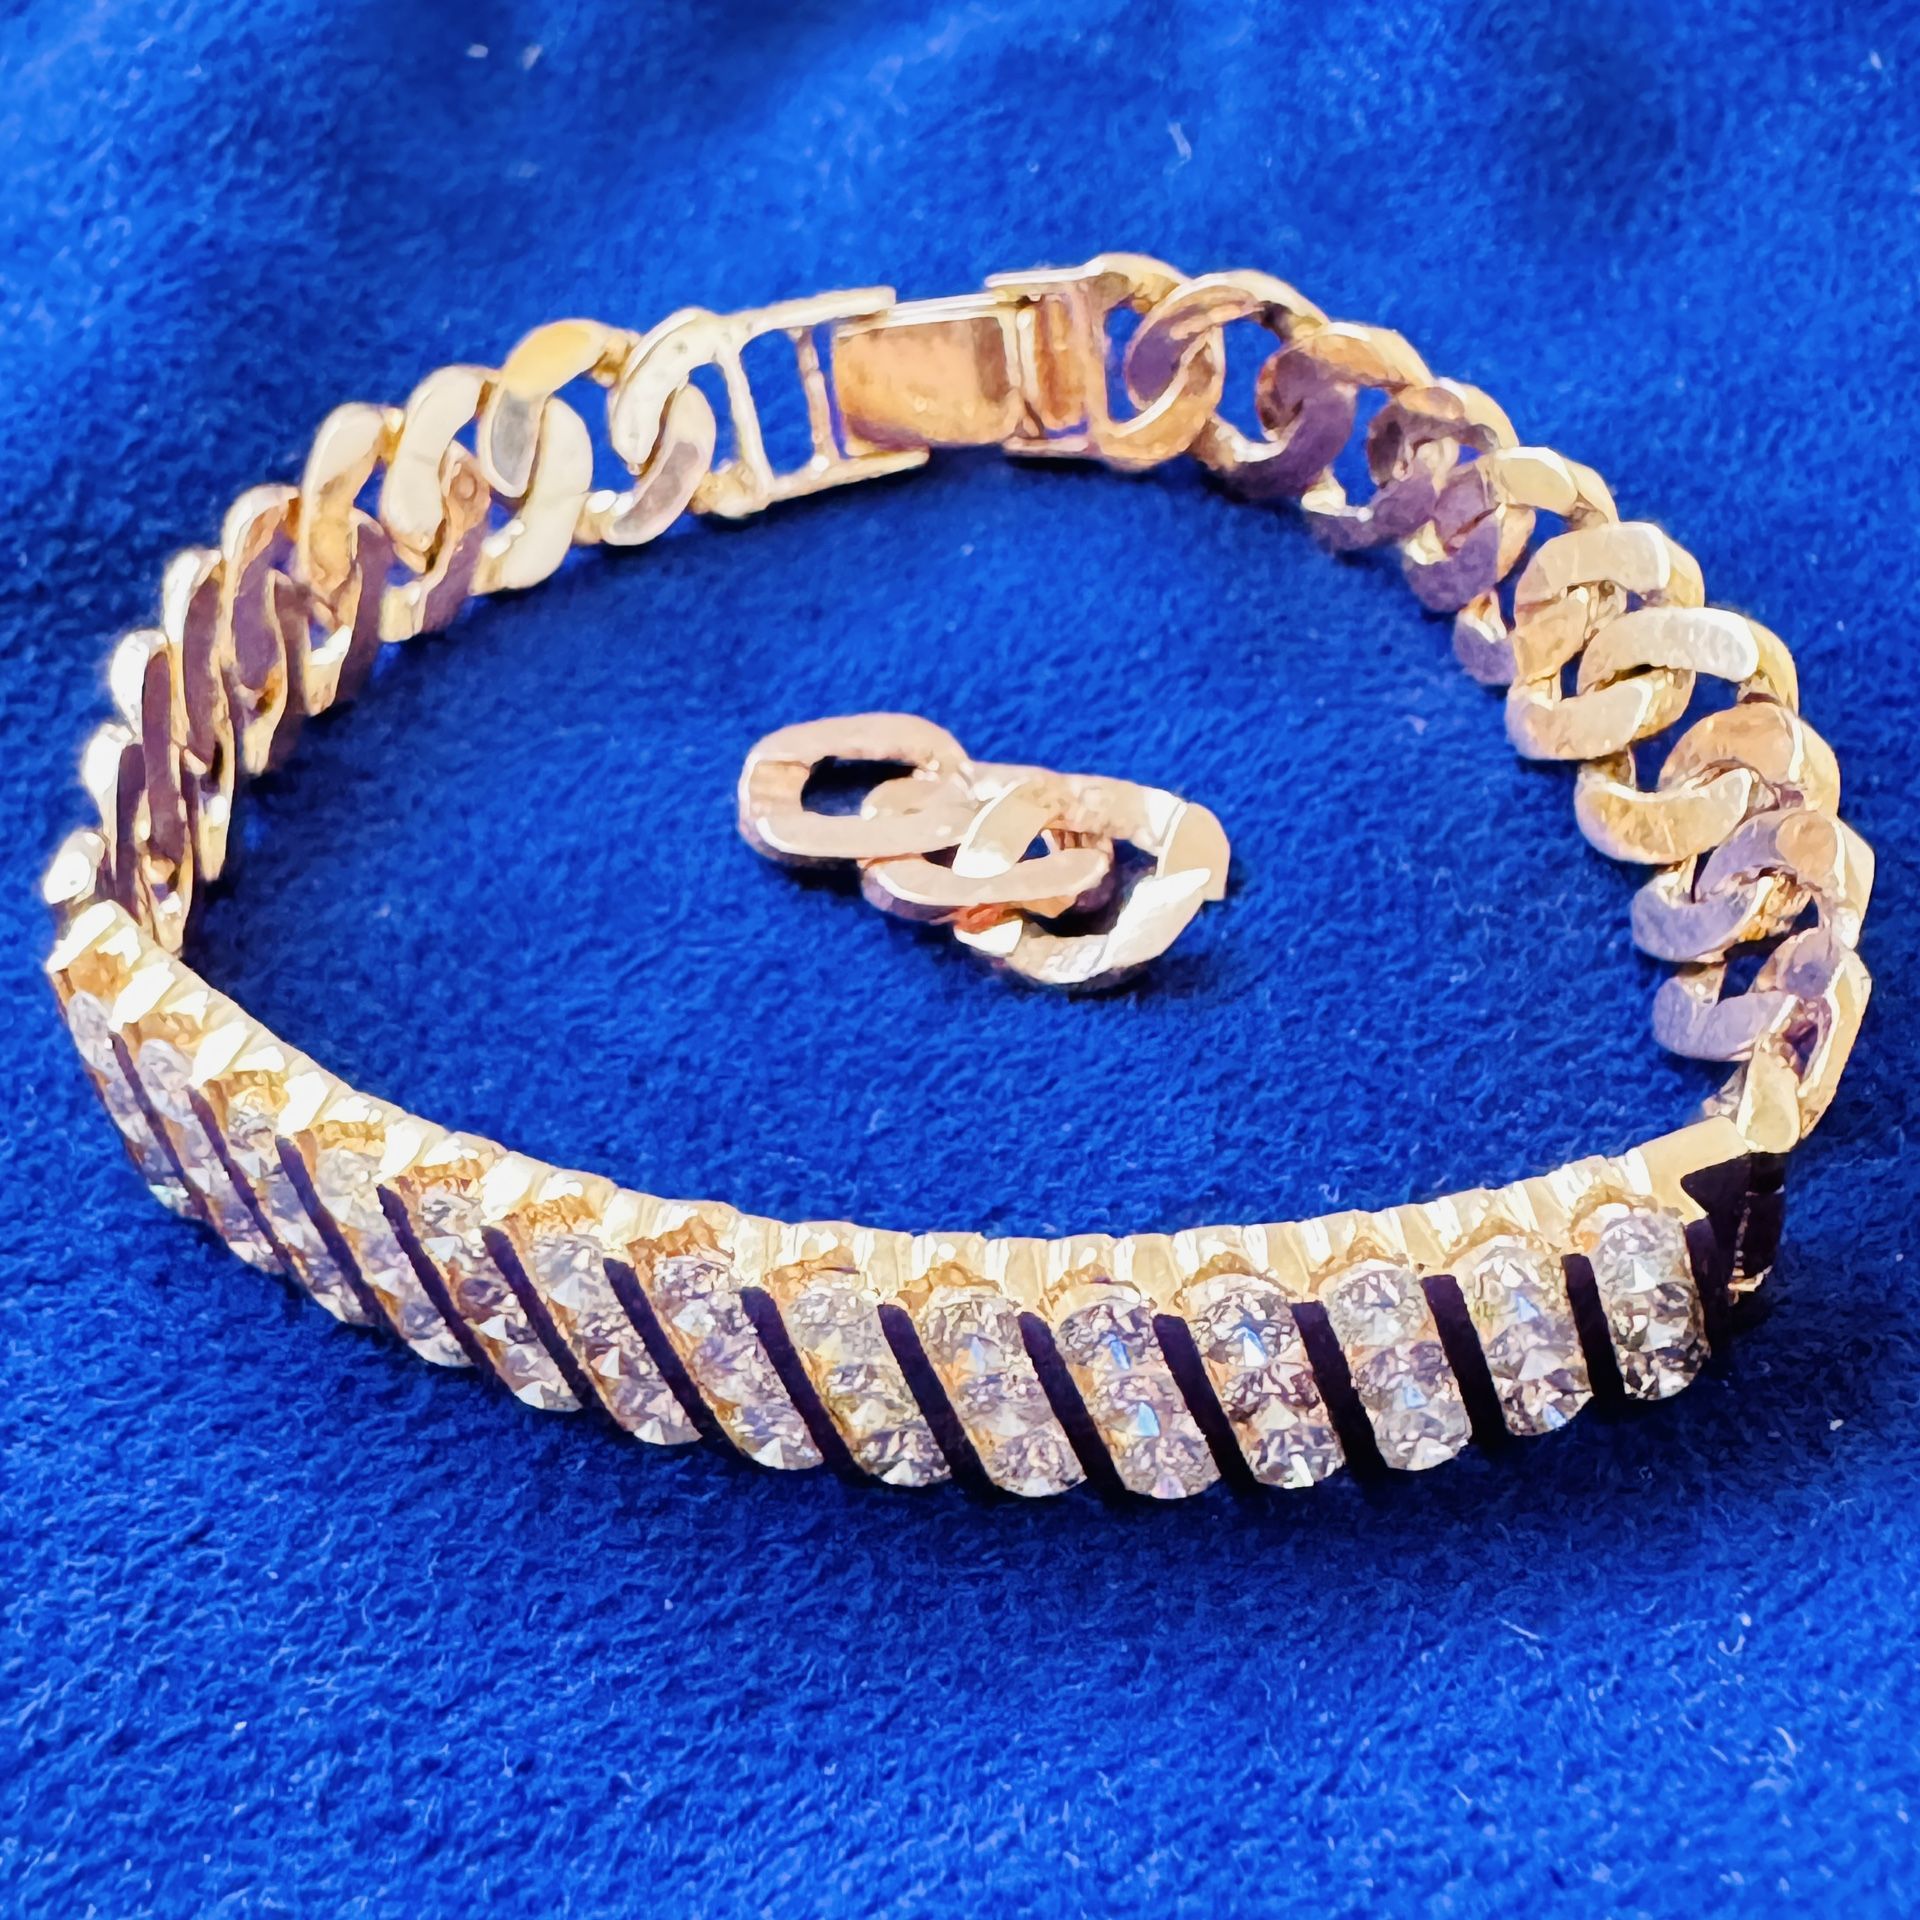 Outstanding‼️ Solid Rose Gold Diamond Bracelet 😍